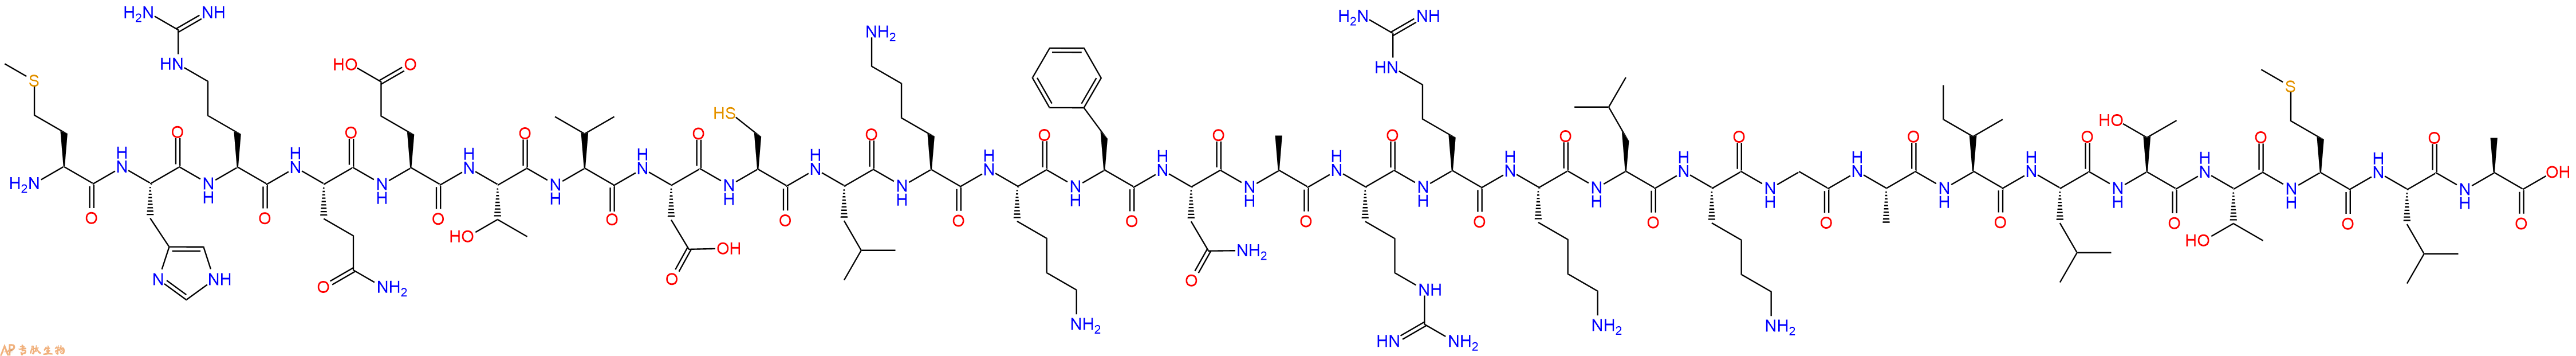 专肽生物产品蛋白激酶II片段 Calmodulin-Dependent Protein Kinase II (2116826-37-0